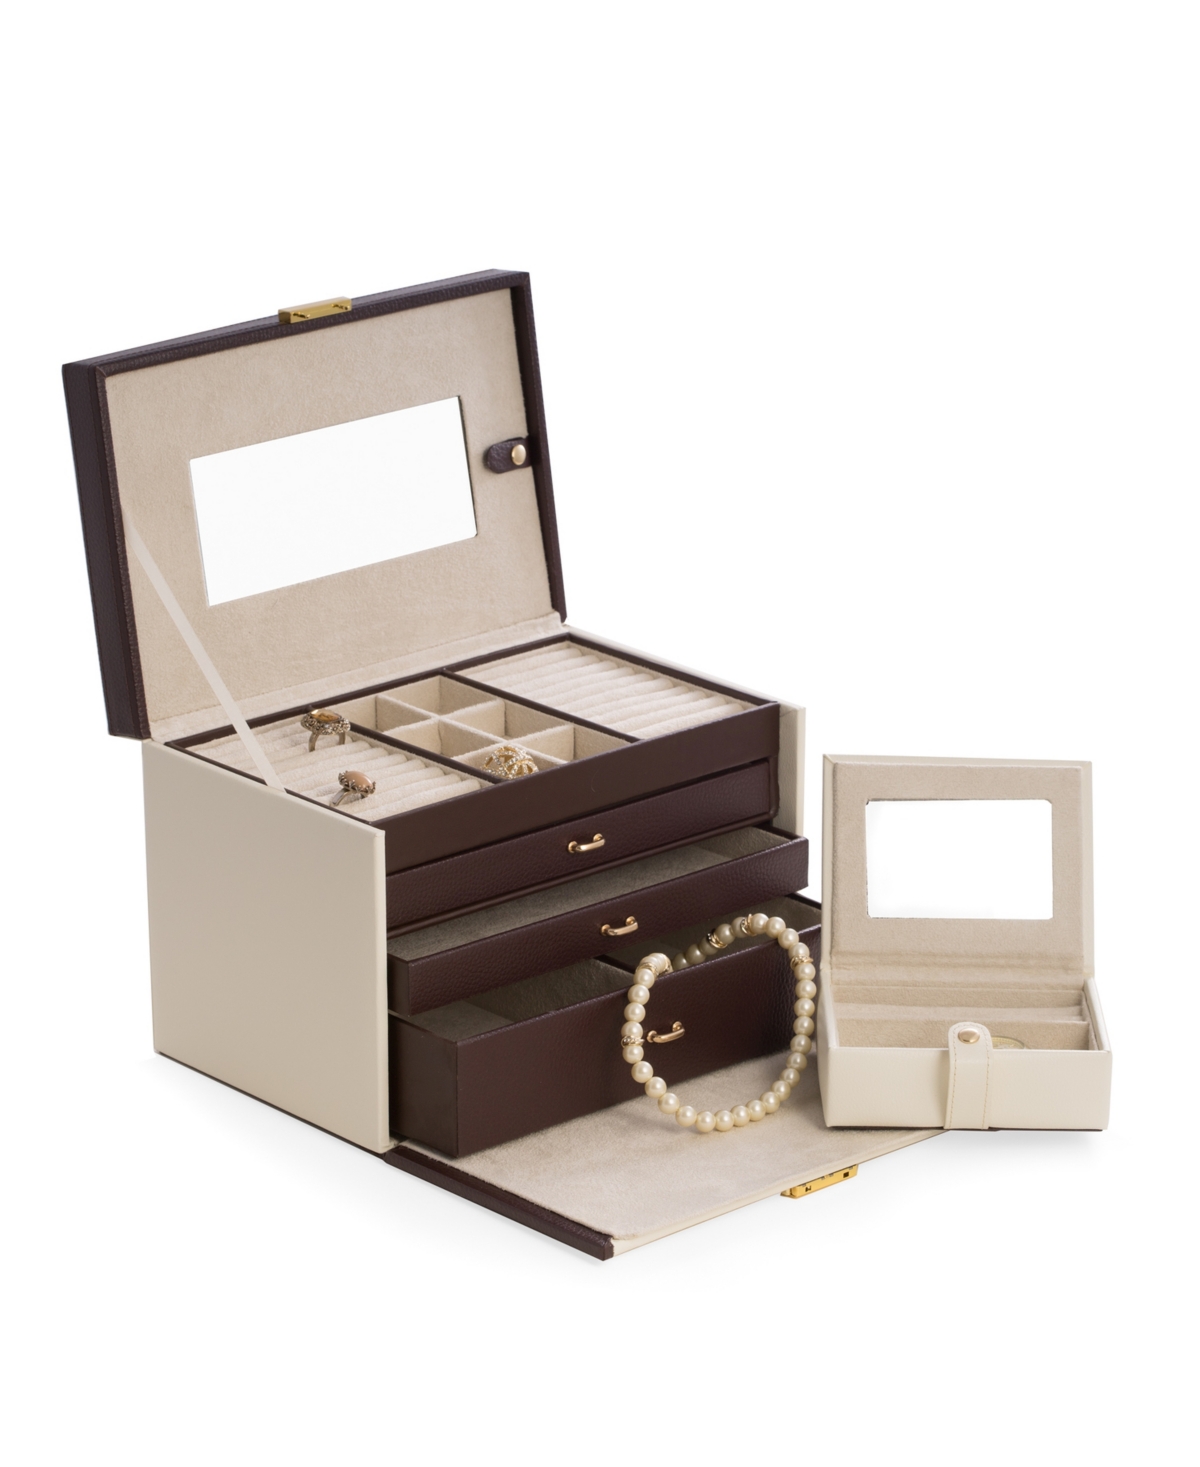 4 Level Jewelry Box - Multi